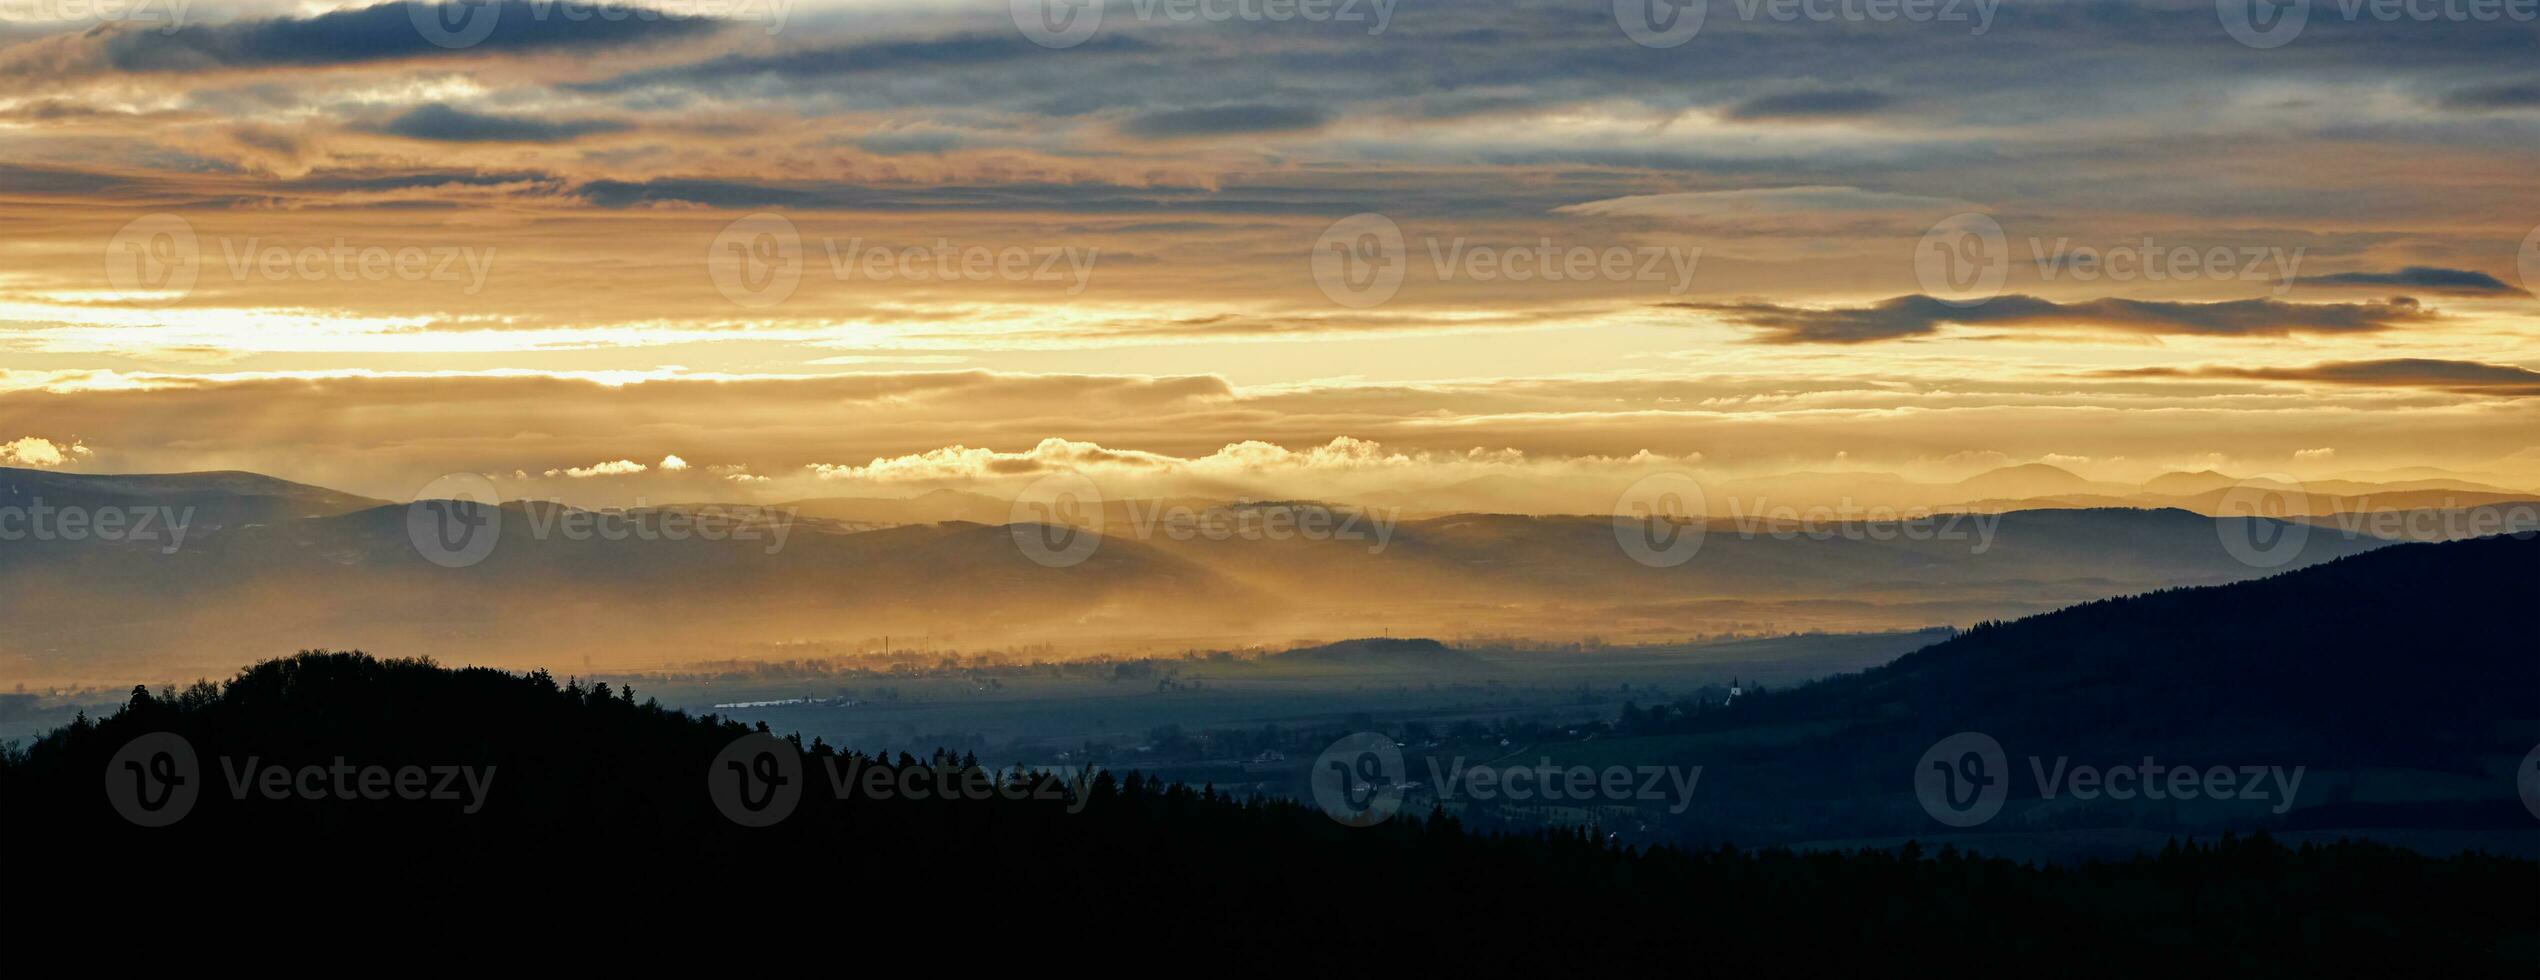 Sunset dramatic sky over mountains shape photo